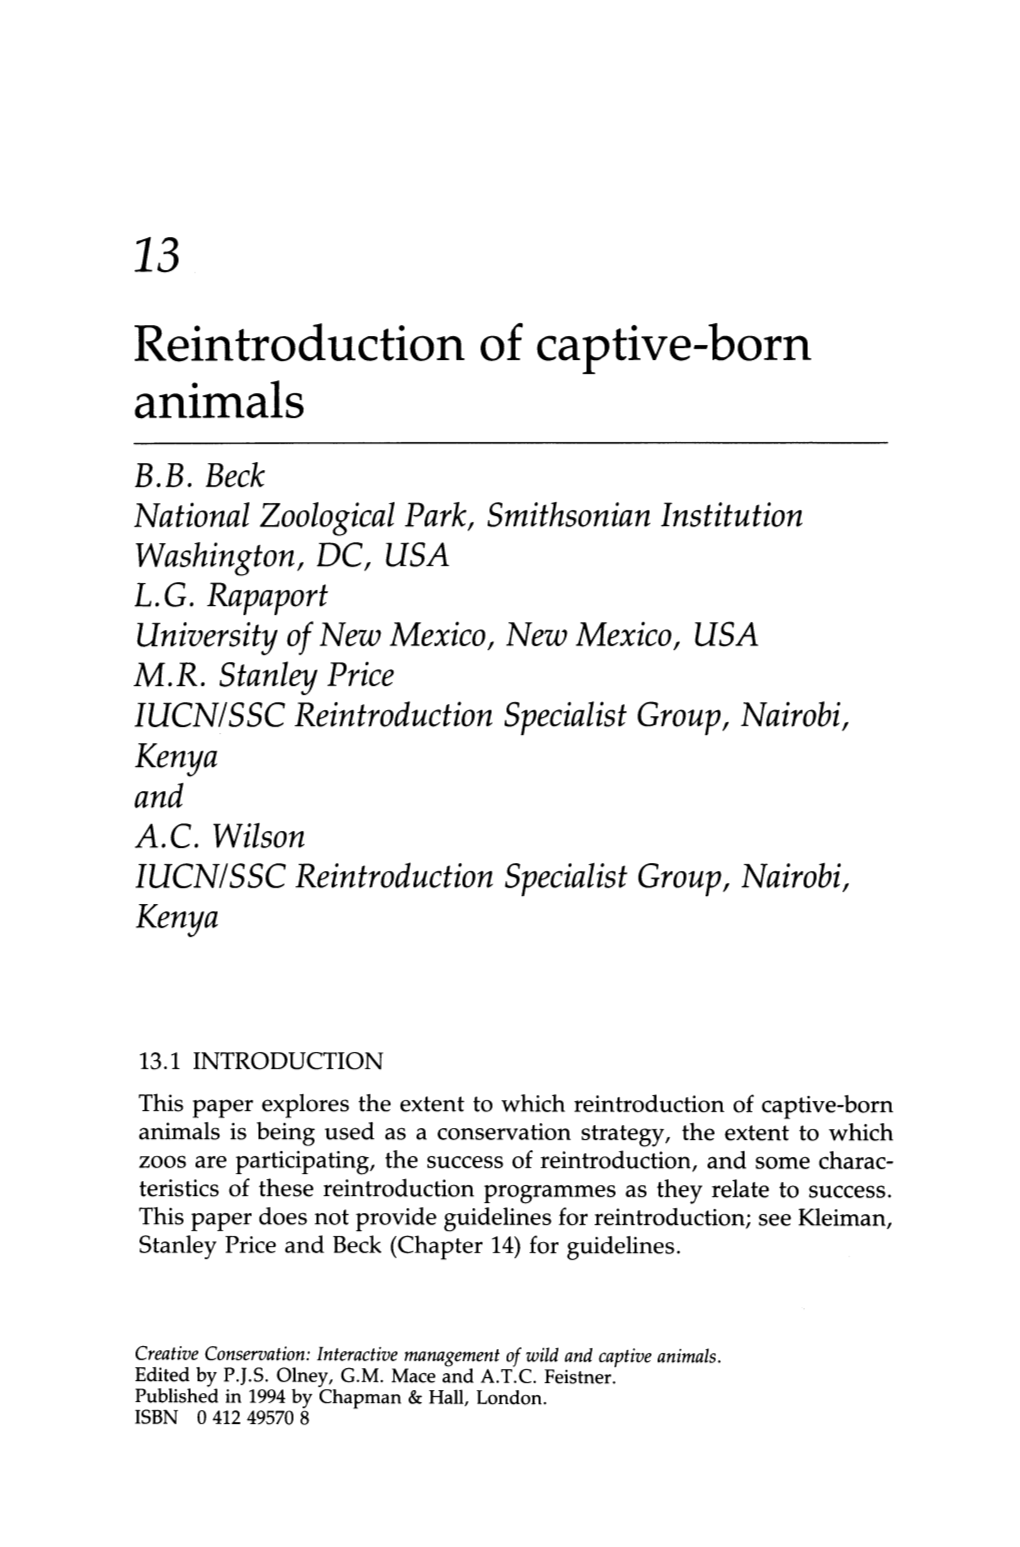 13 Reintroduction of Captive-Born Animals B.B